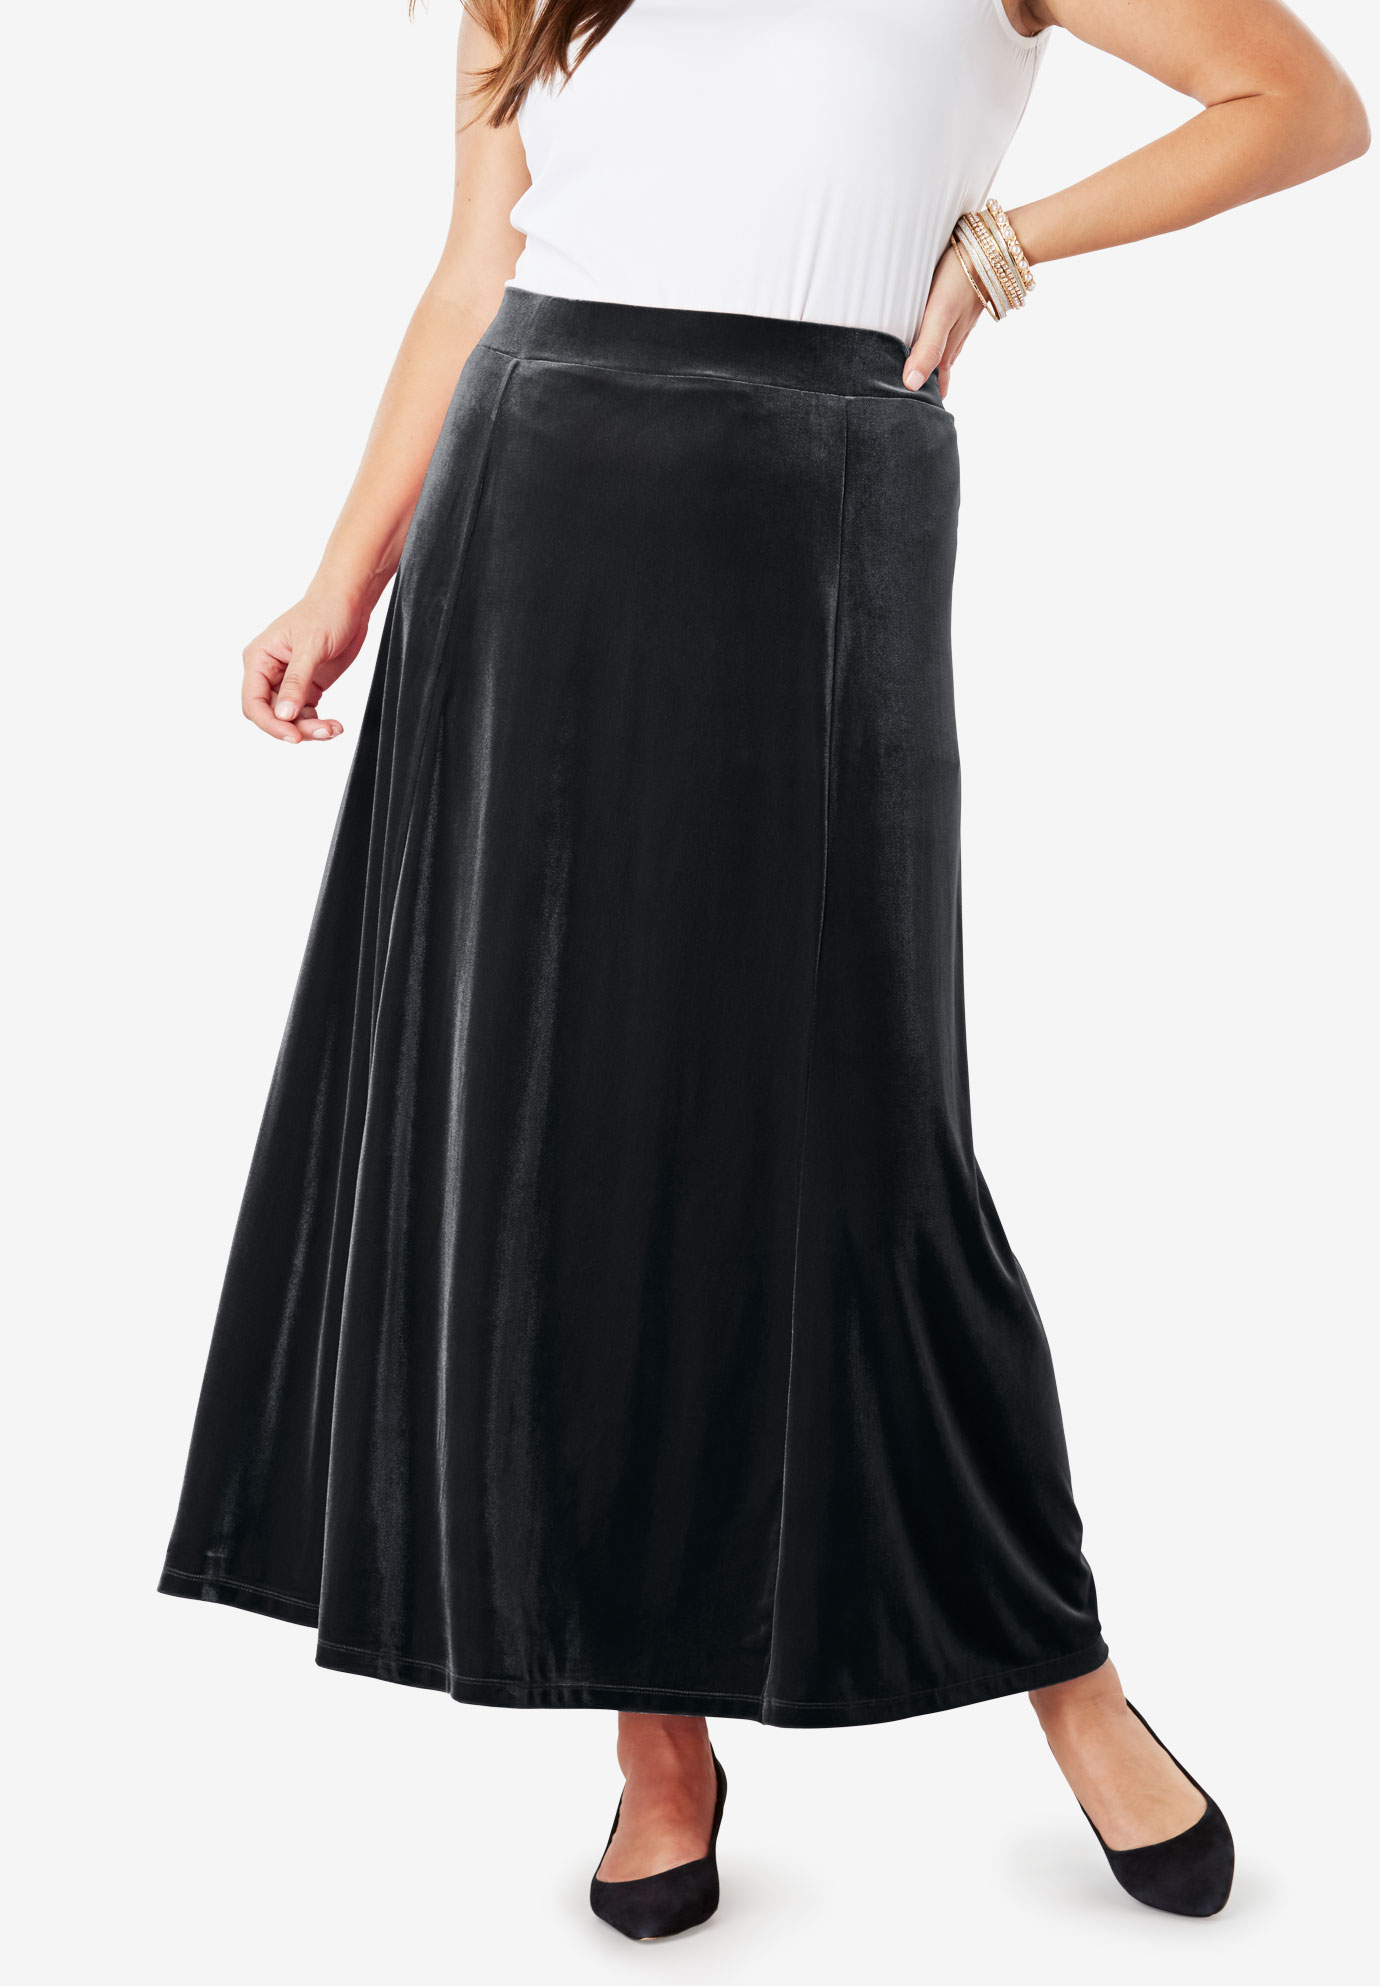 Jessica London Women's Plus Size Velour Maxi Skirt | eBay